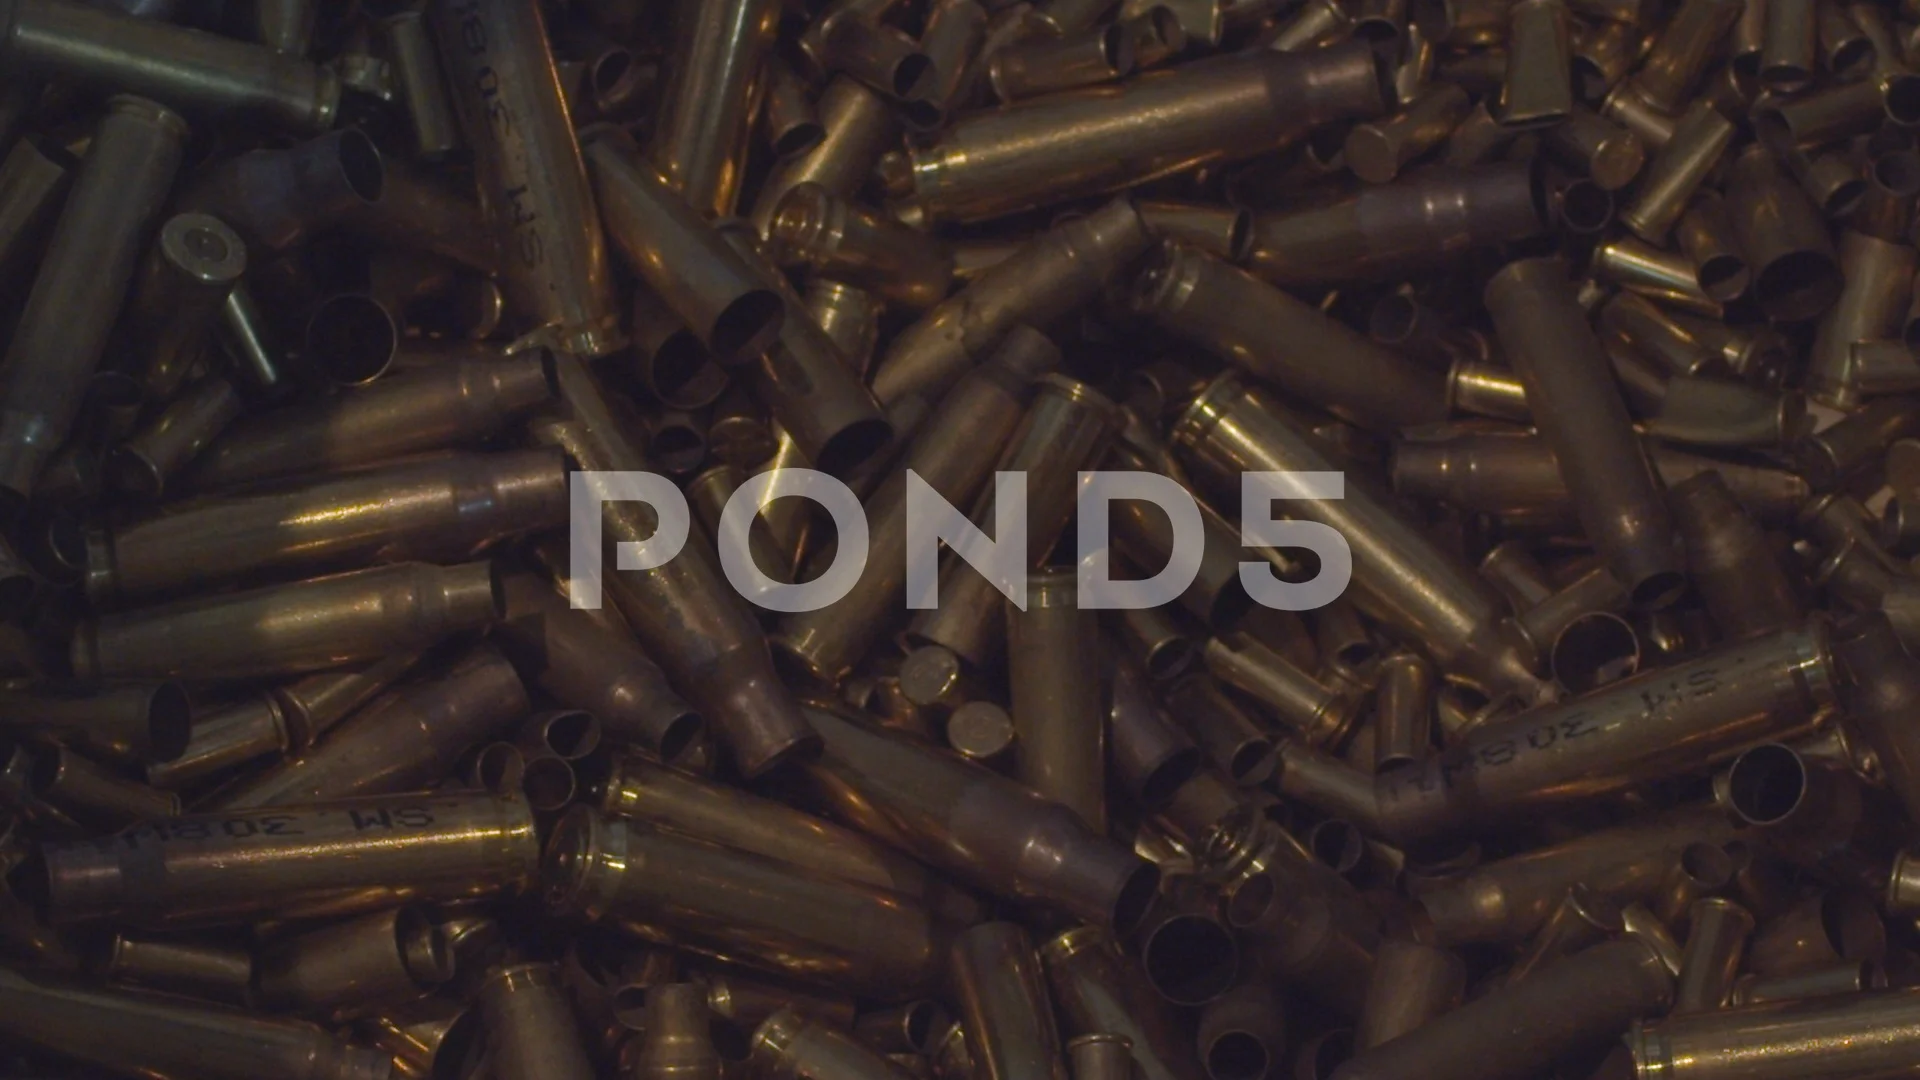 https://images.pond5.com/empty-bullet-shells-being-dumped-footage-118157217_prevstill.jpeg